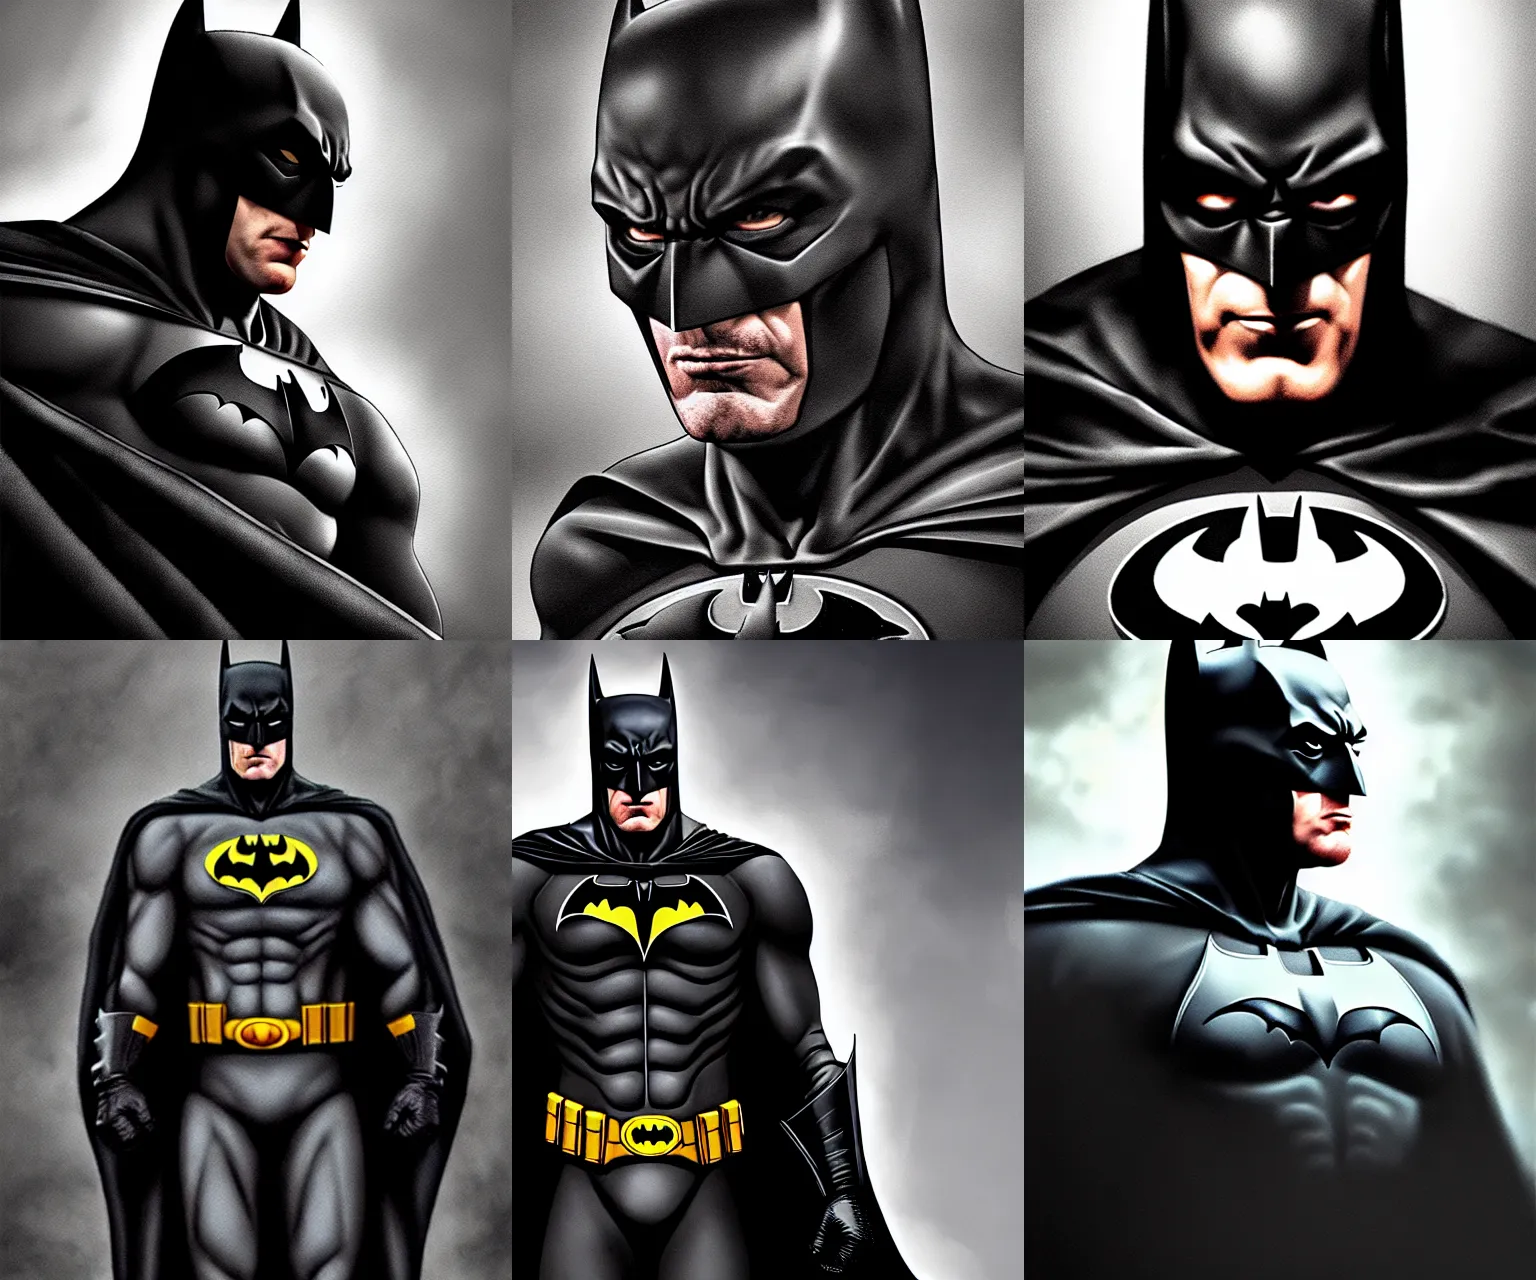 Prompt: portrait of batman, gotham city background, dark atmosphere, photorealistic, hyper - realistic, artstation, trending, by john bolton and scott hampton